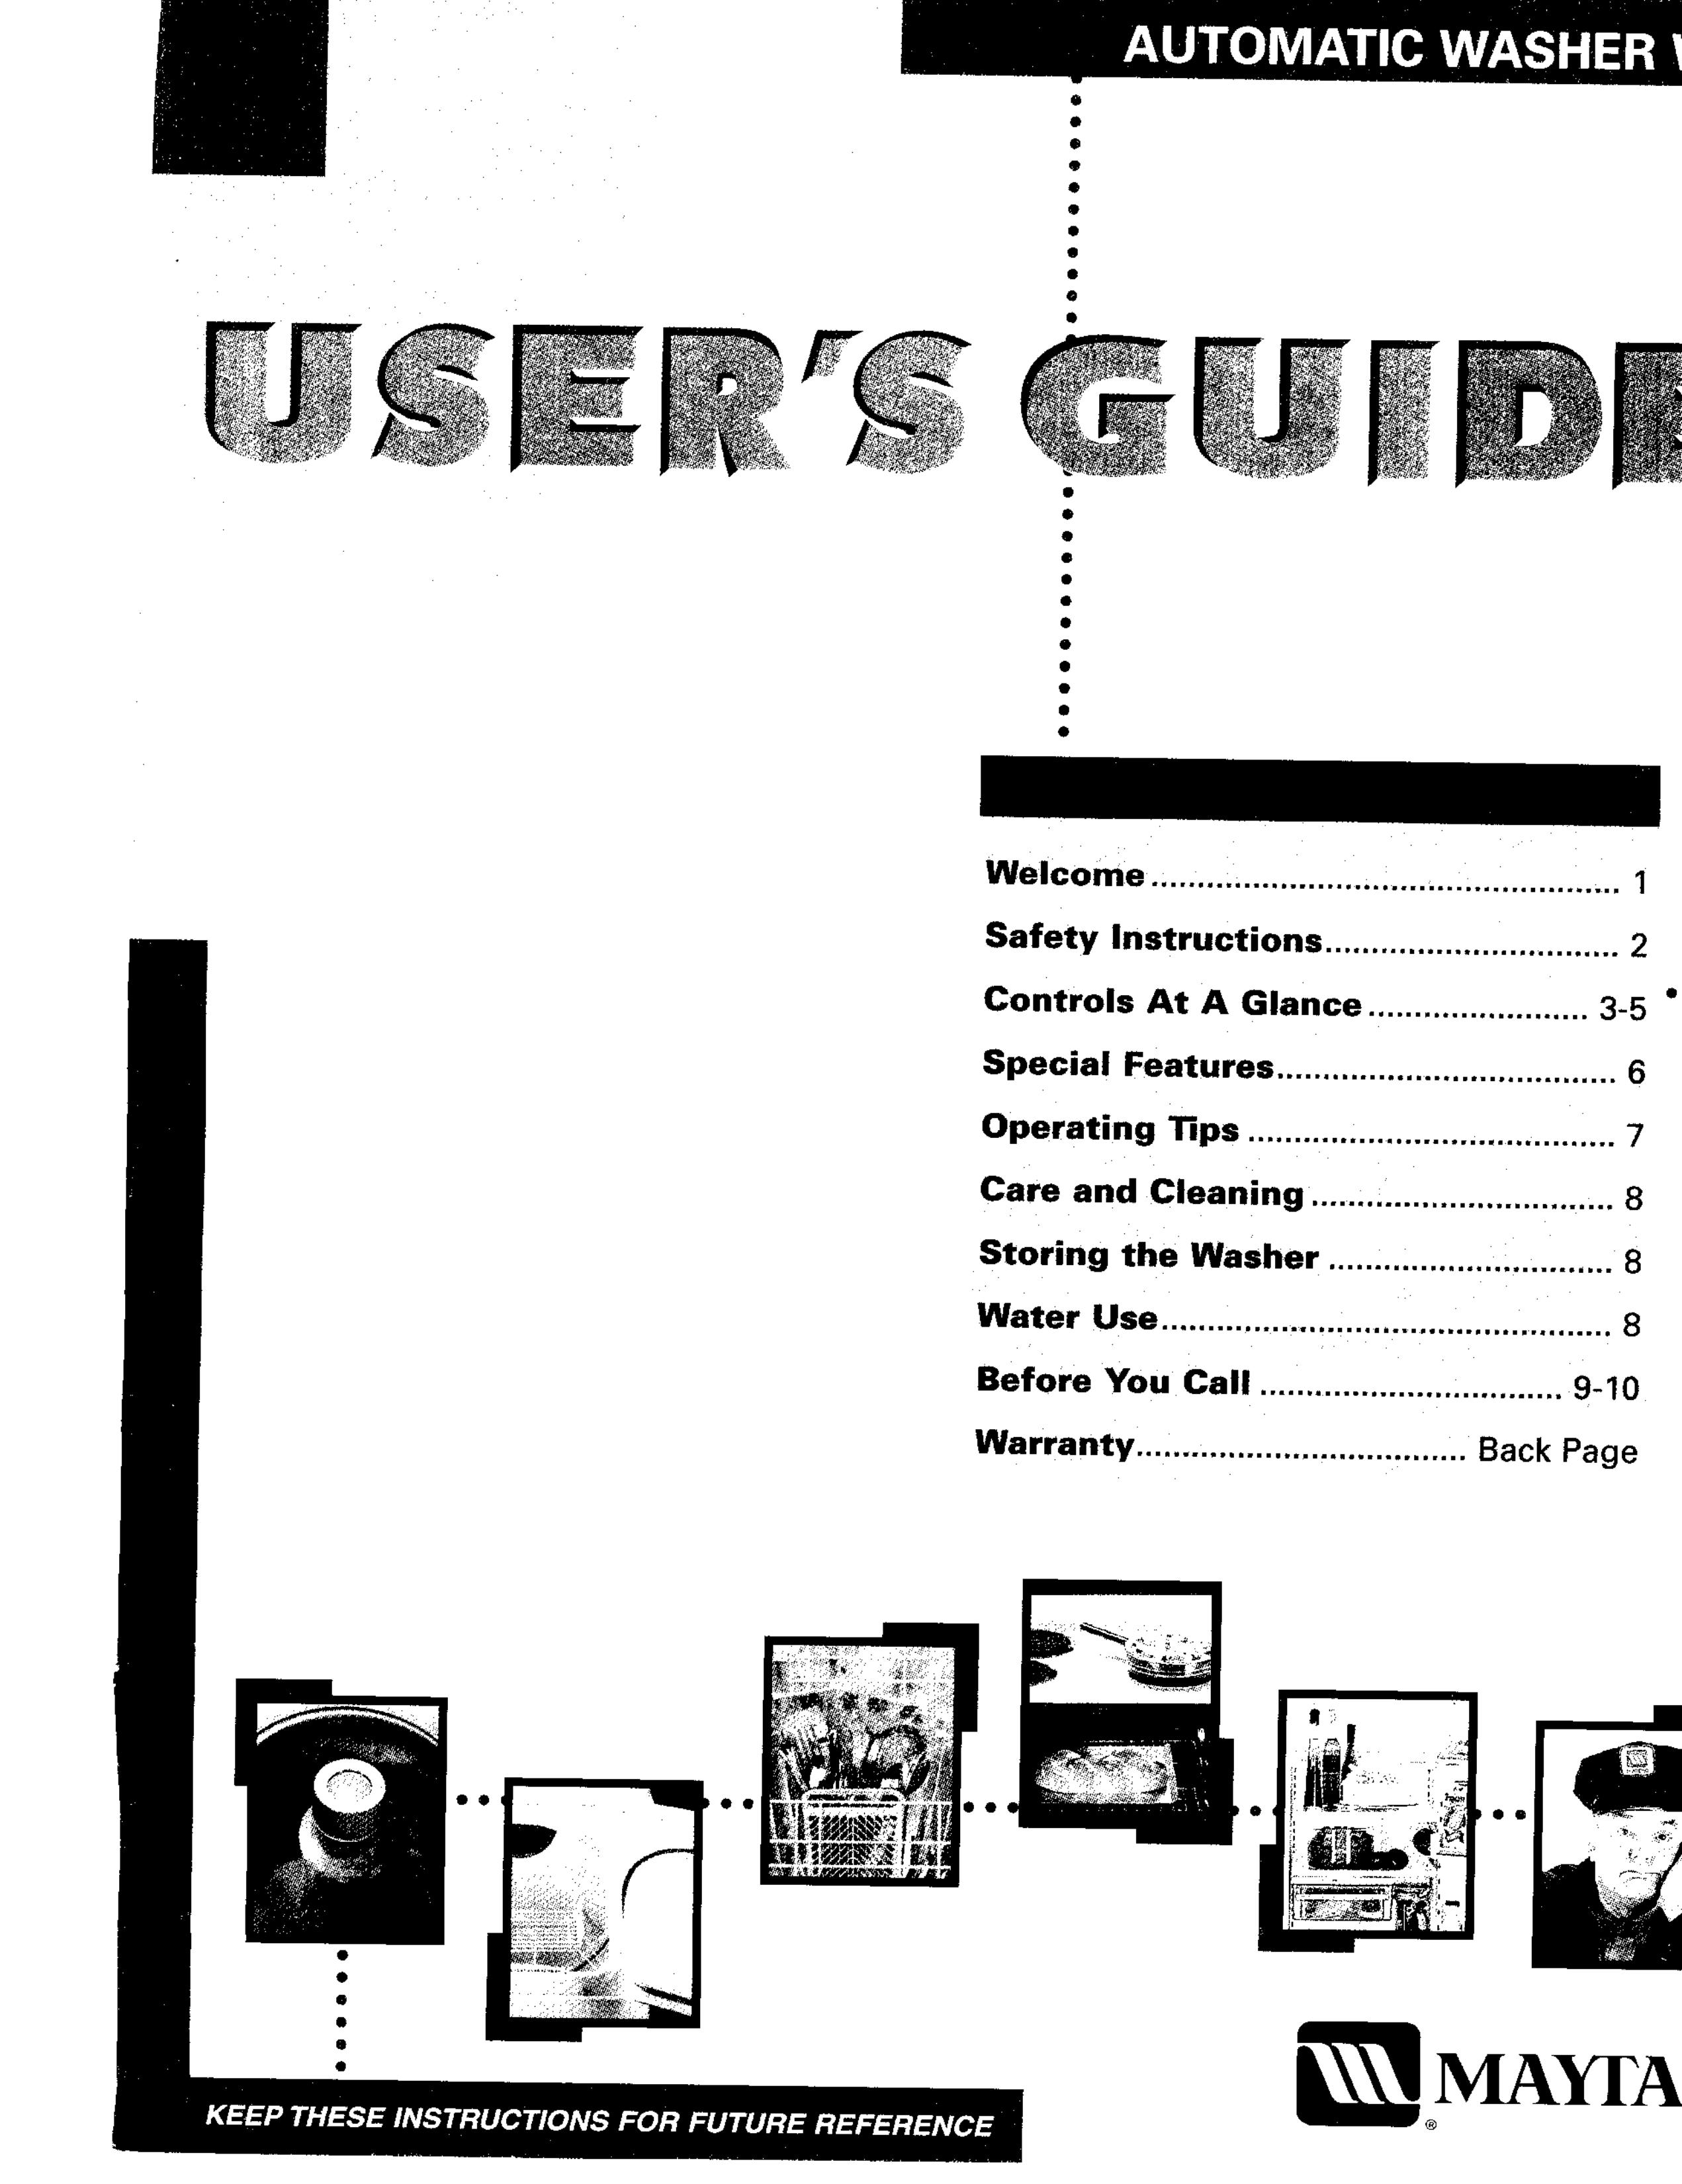 Maytag LAT9706 Washer User Manual